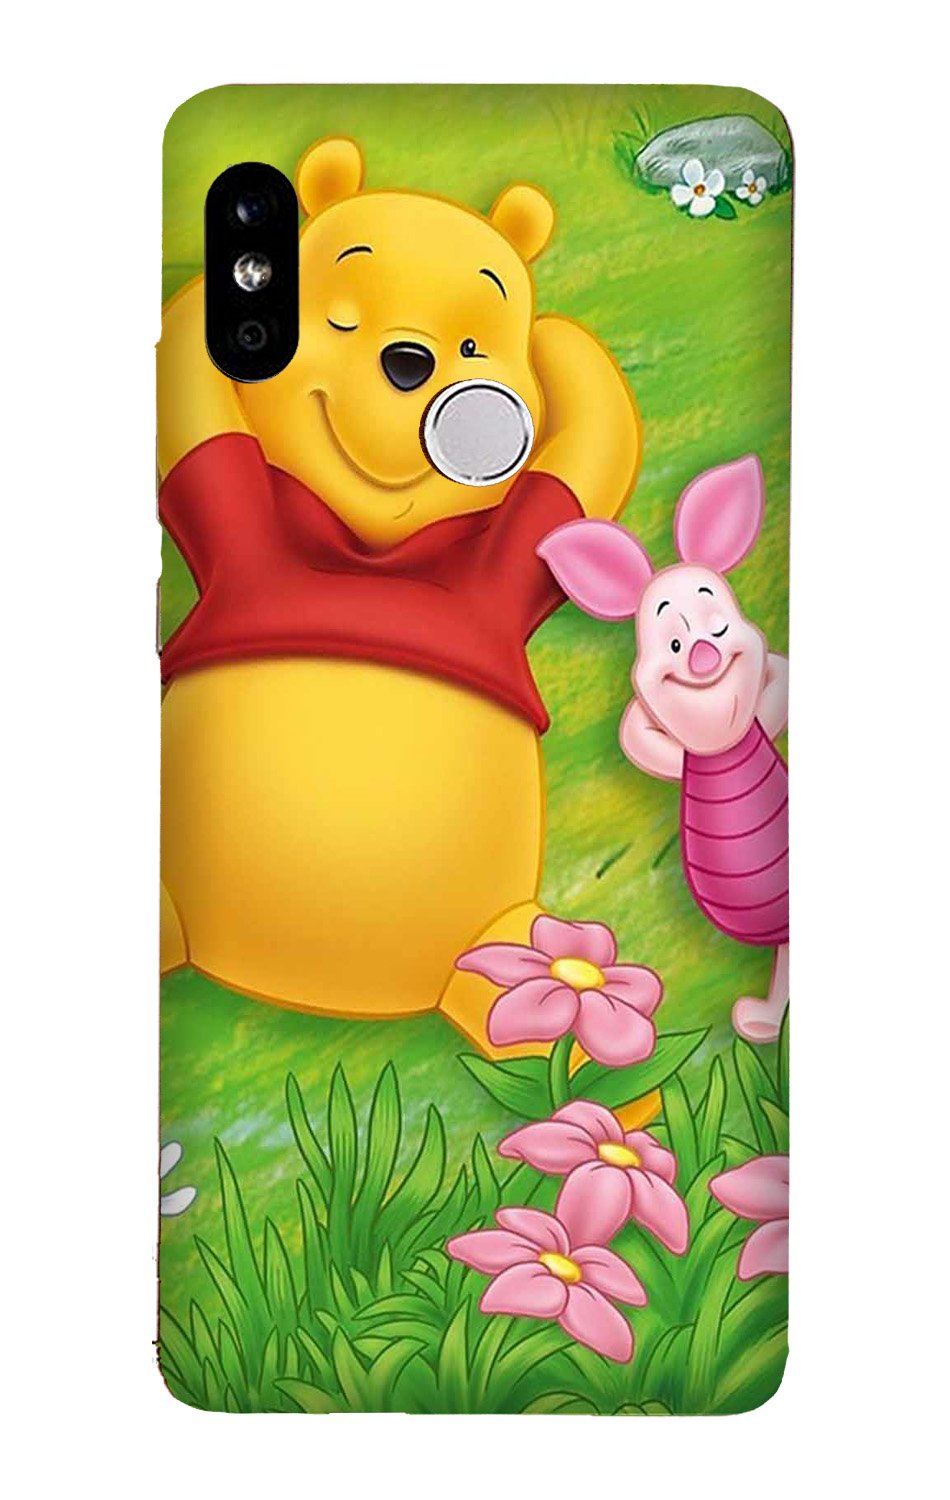 Winnie The Pooh Mobile Back Case for Redmi Note 6 Pro  (Design - 348)